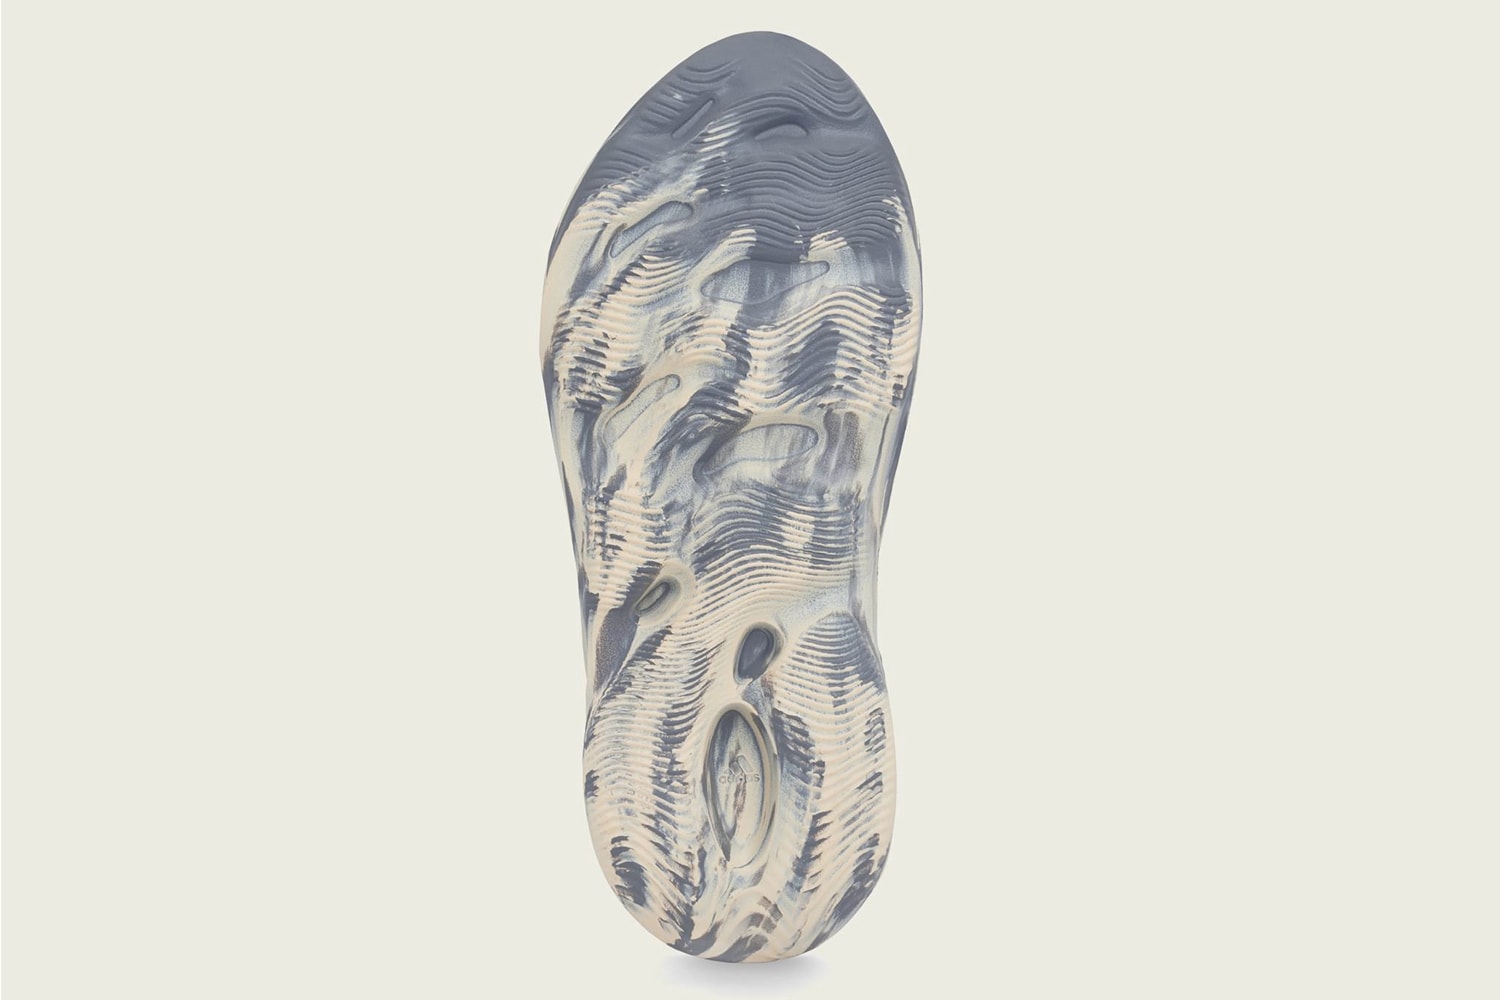 adidas YEEZY Foam Runner 最新配色系列發售情報公開